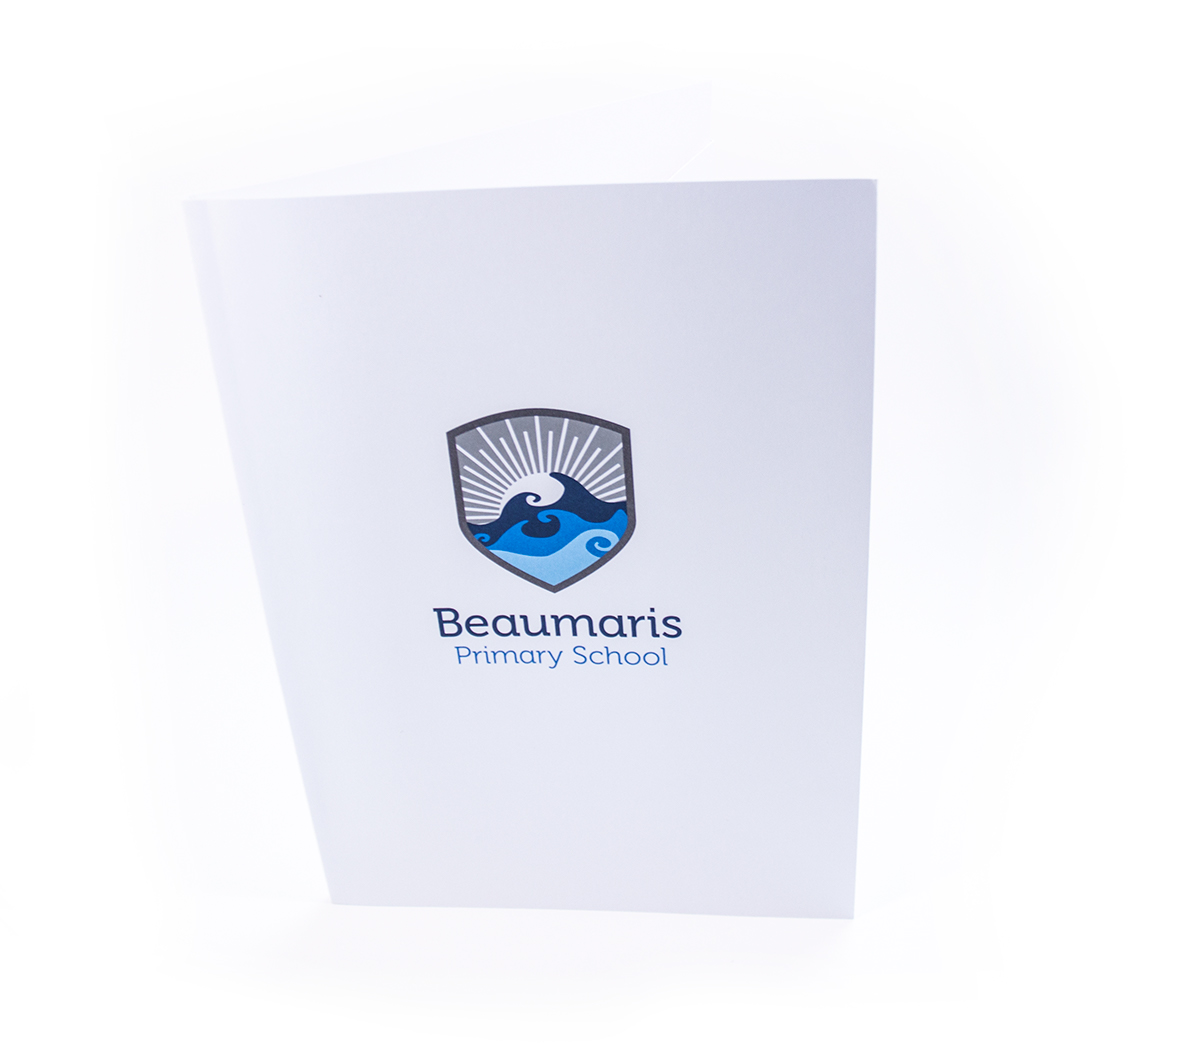 Beaumaris beaumaris primary school primary school primary school visual visual identity identity Stationery letterhead business card presentation folder folder